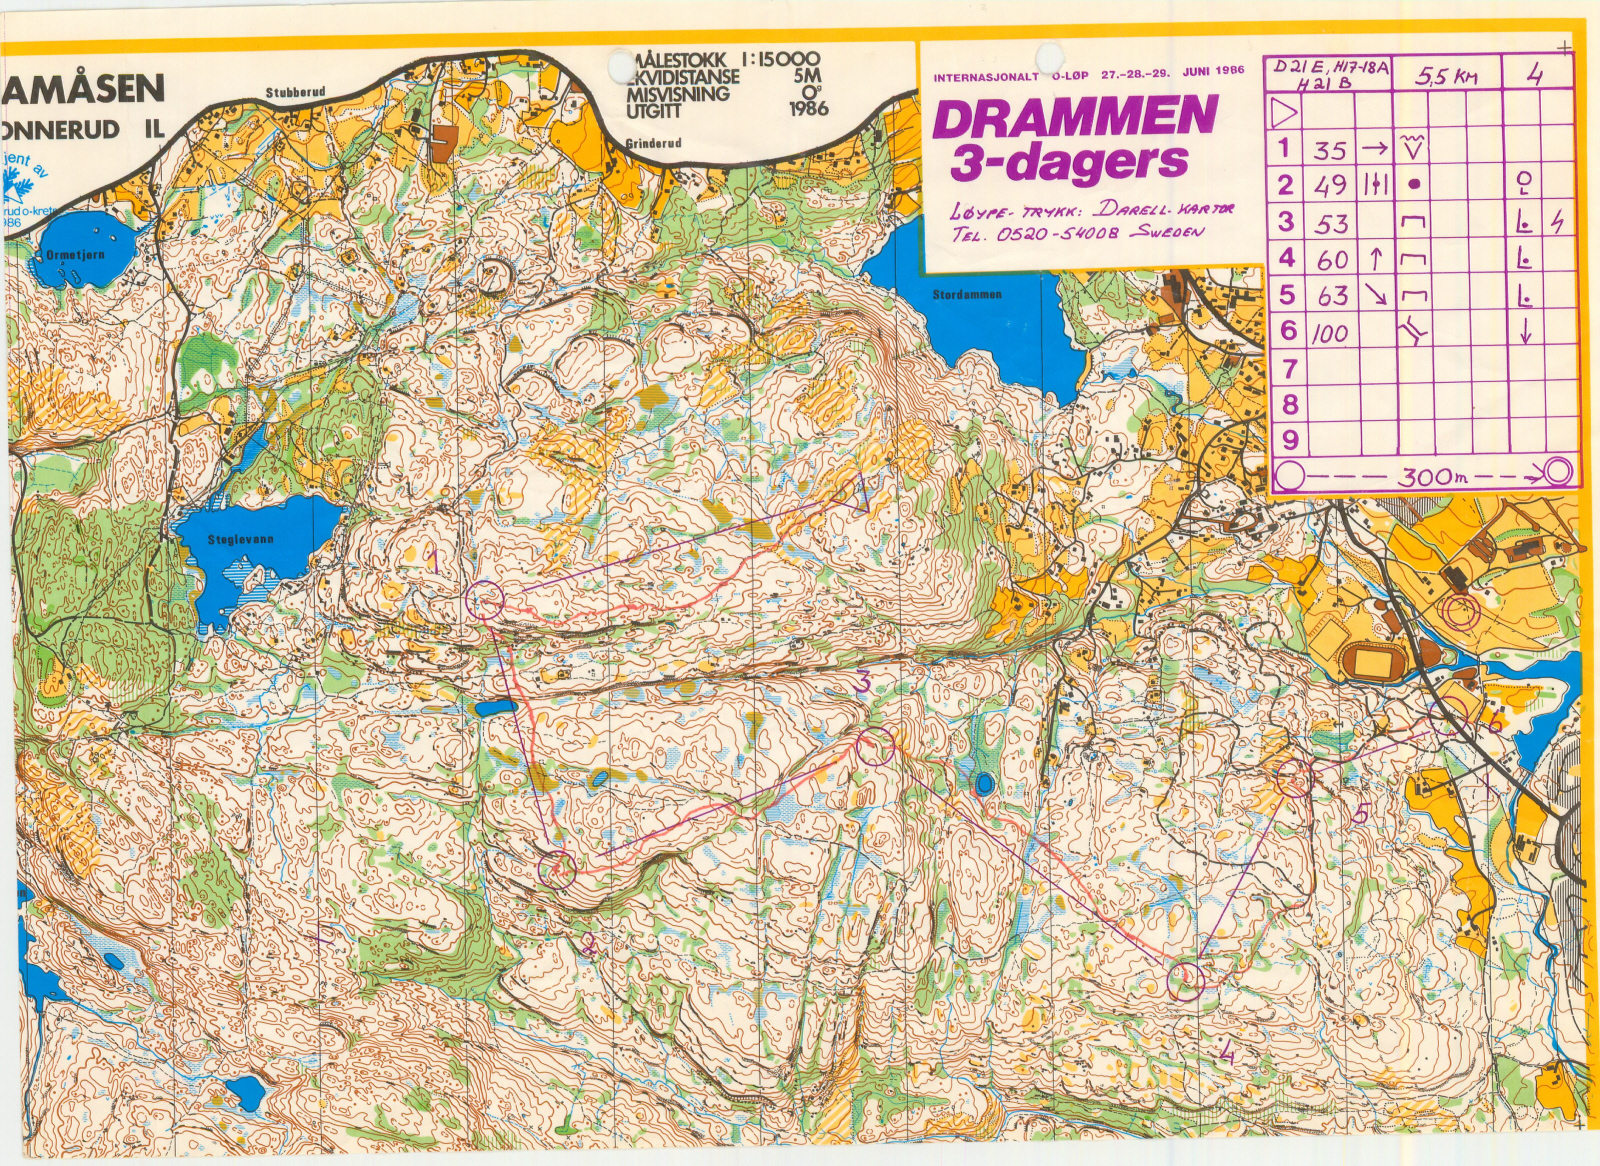 Drammen 3-dagers etappe 3 (29-06-1986)